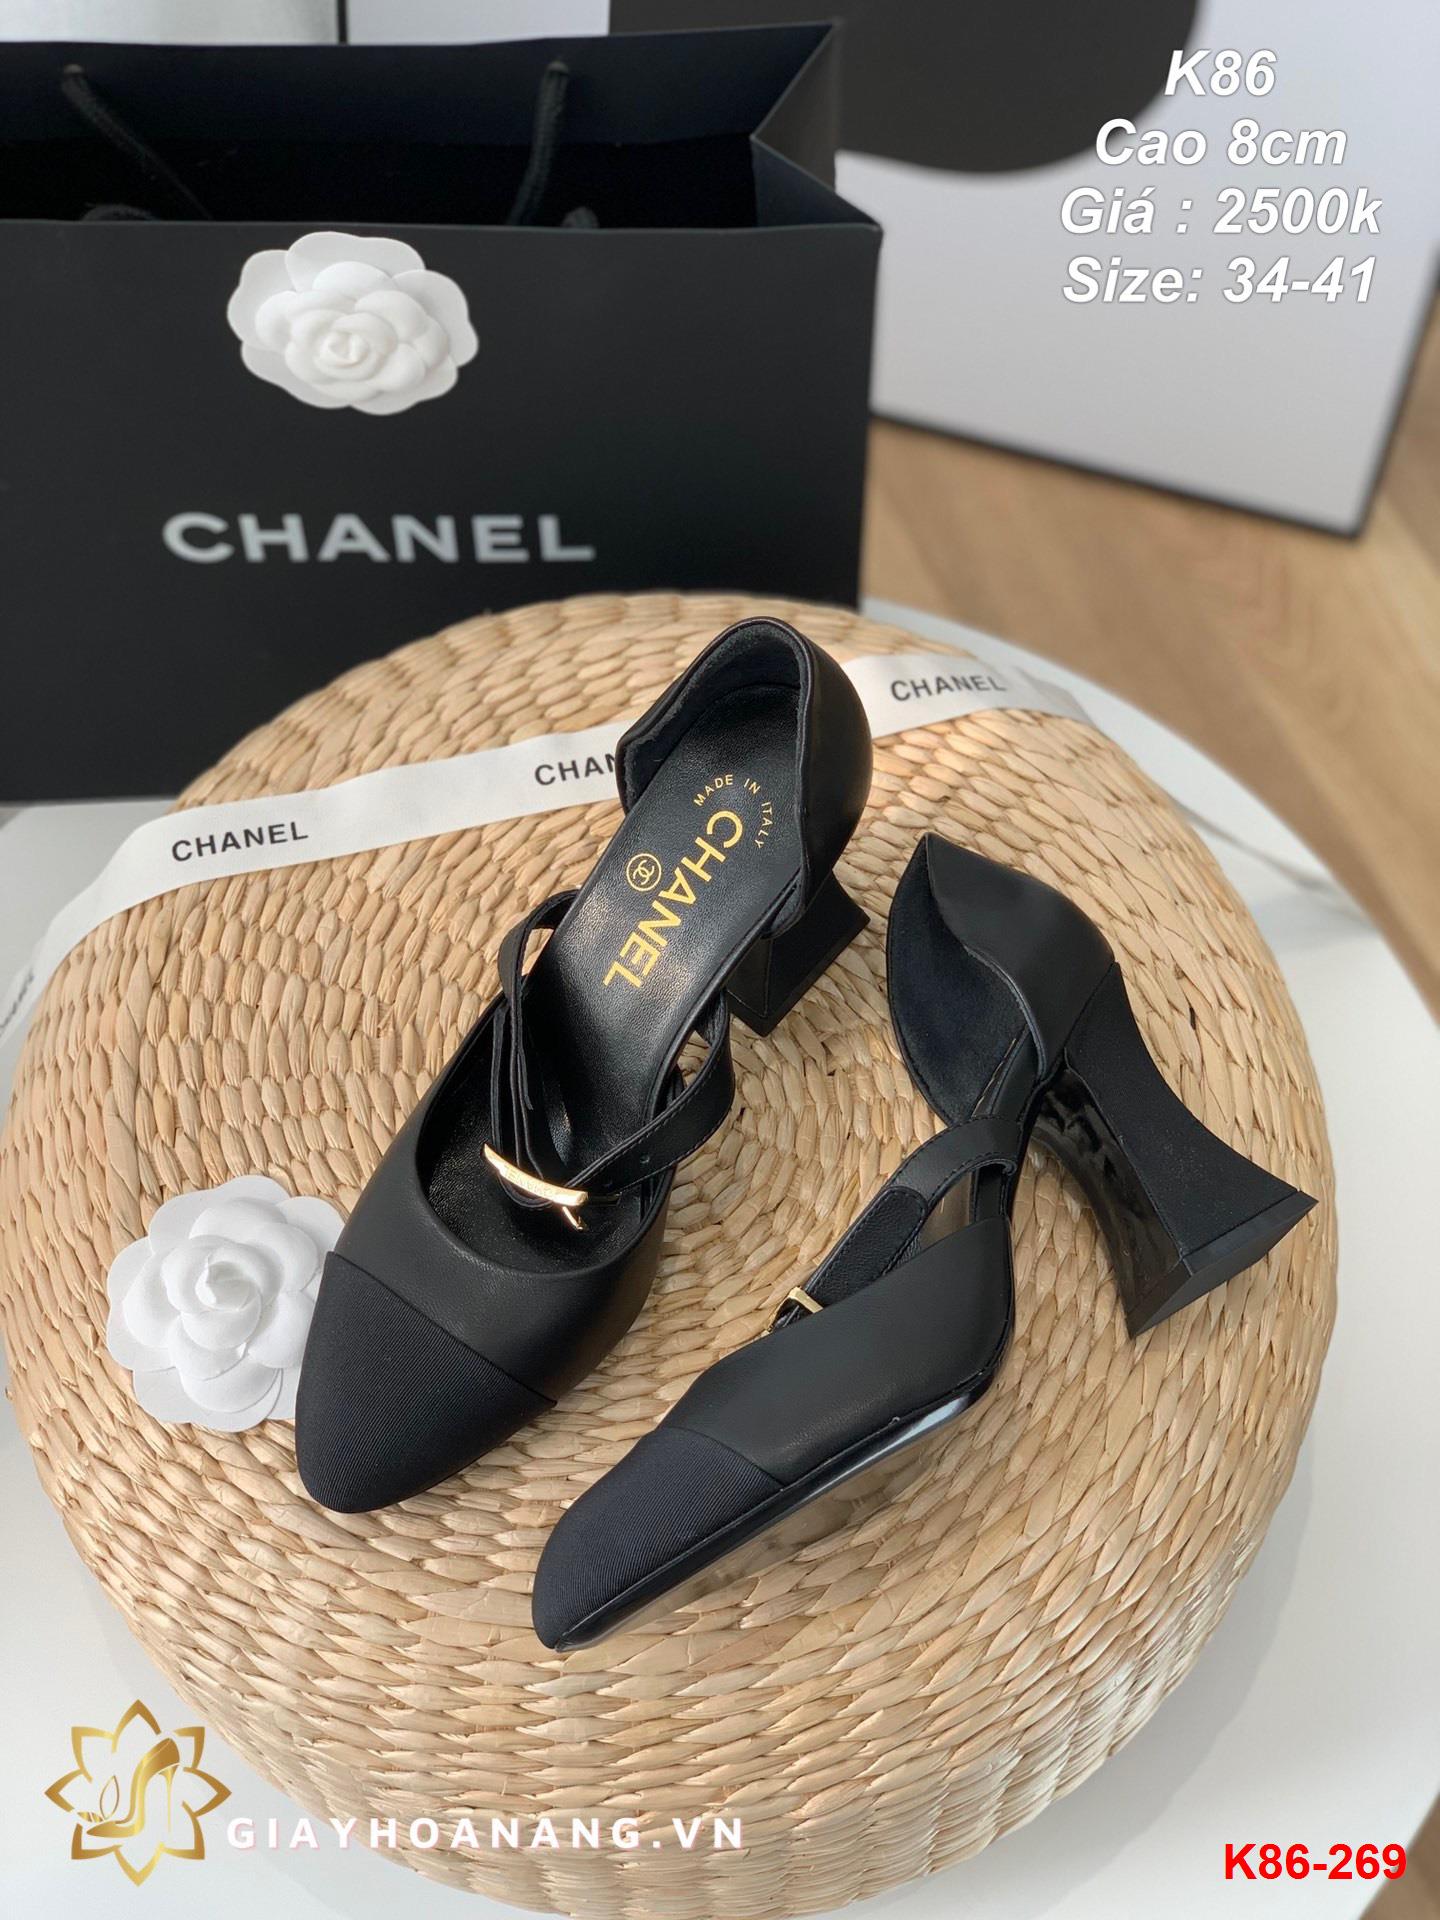 K86-269 Chanel sandal cao 8cm siêu cấp